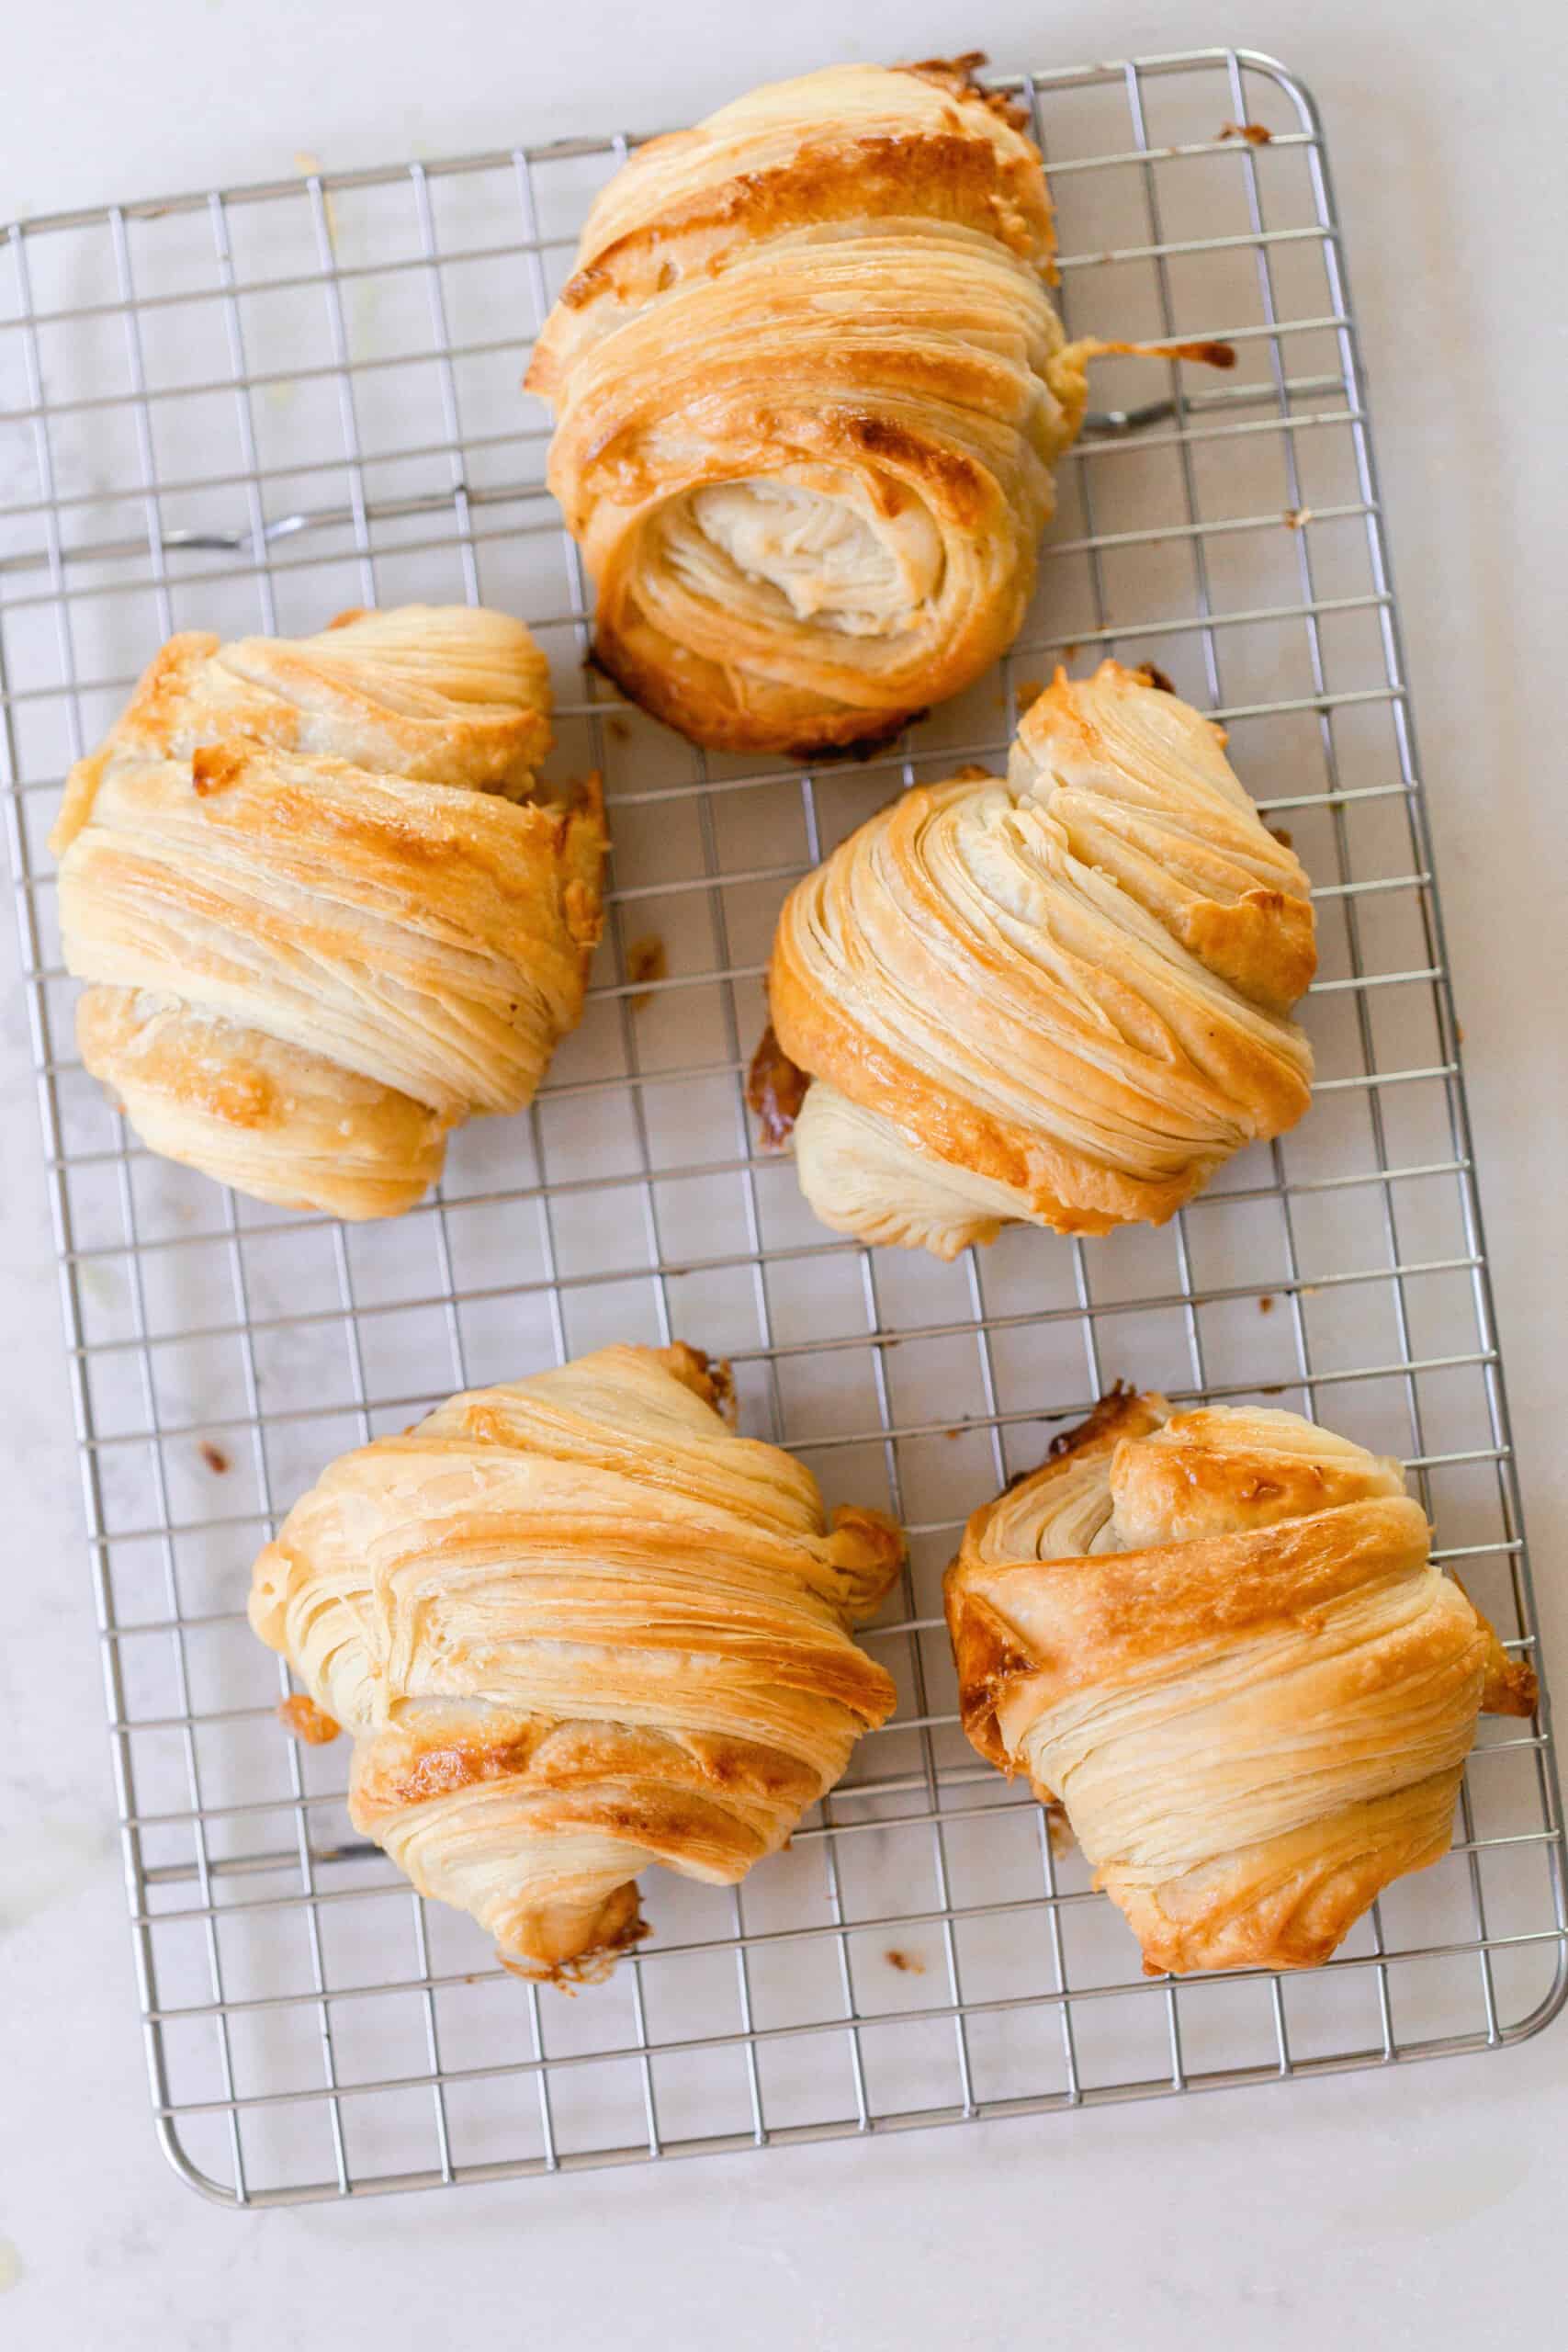 The Quest For Perfect Croissants Via A DIY Dough Sheeter